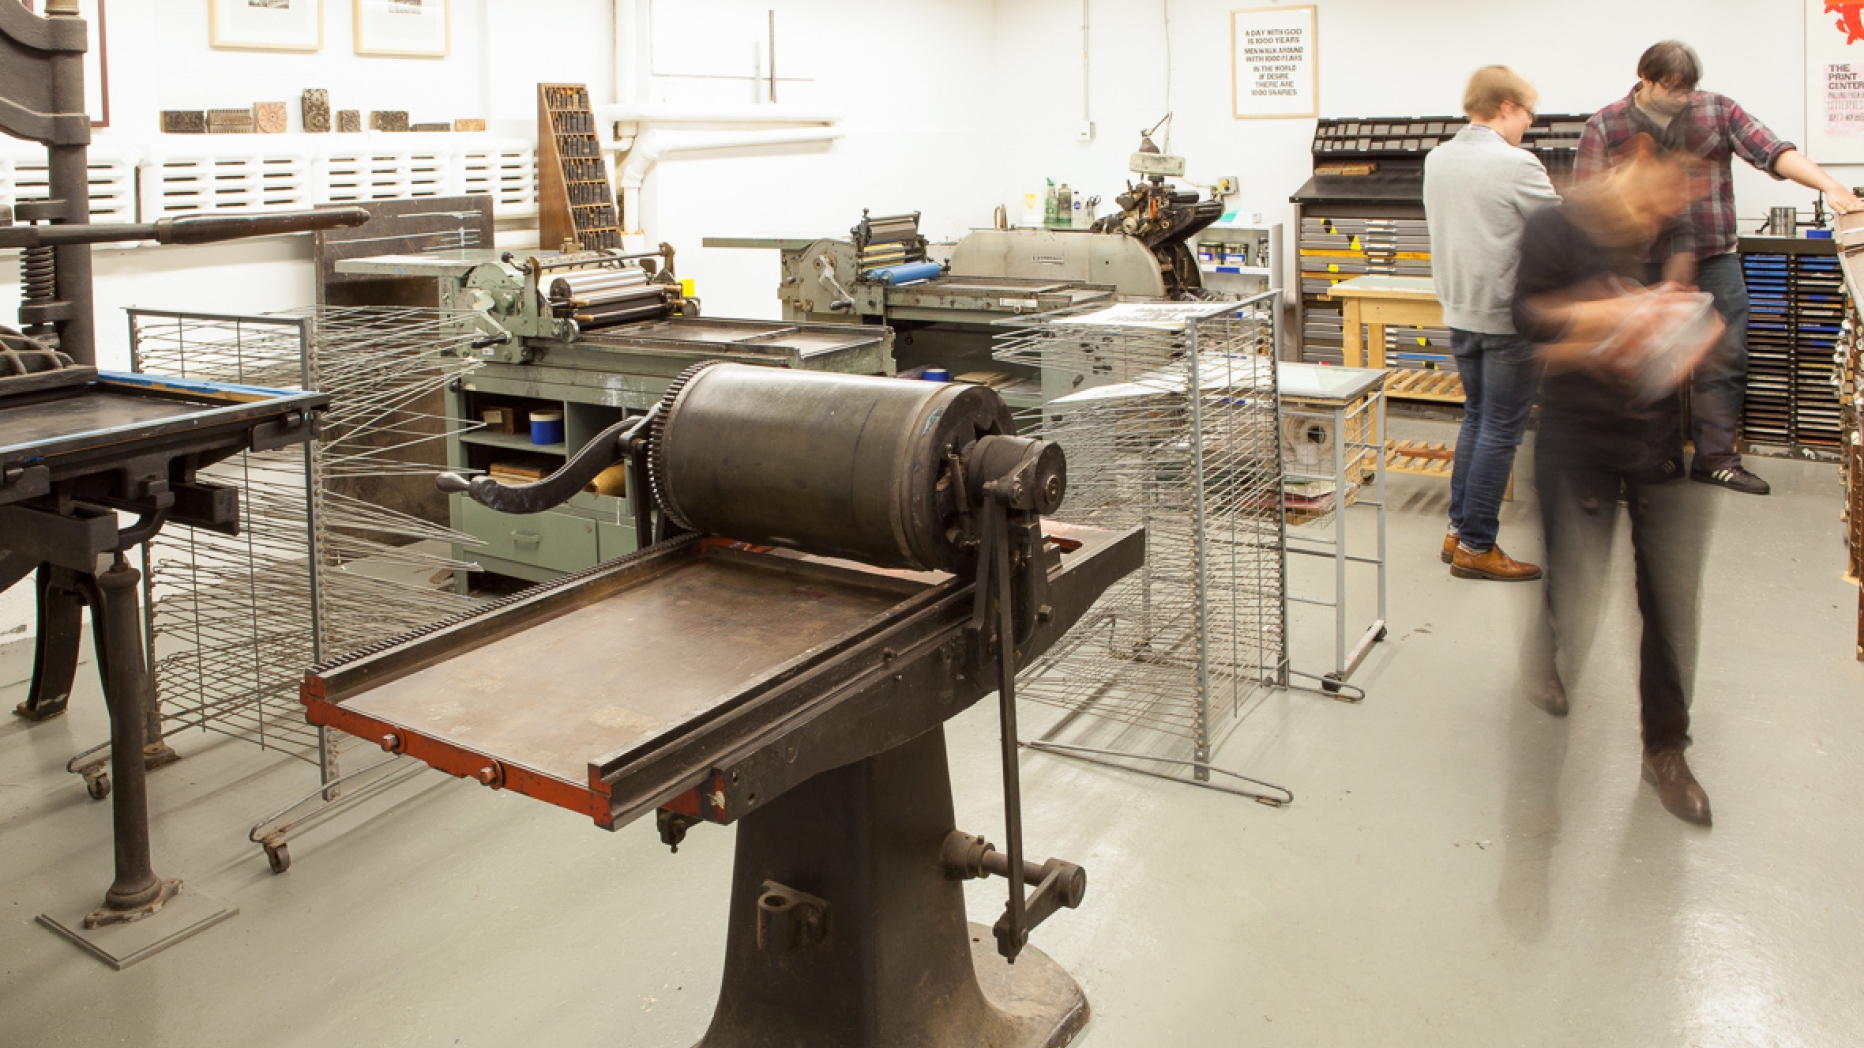 Print shop